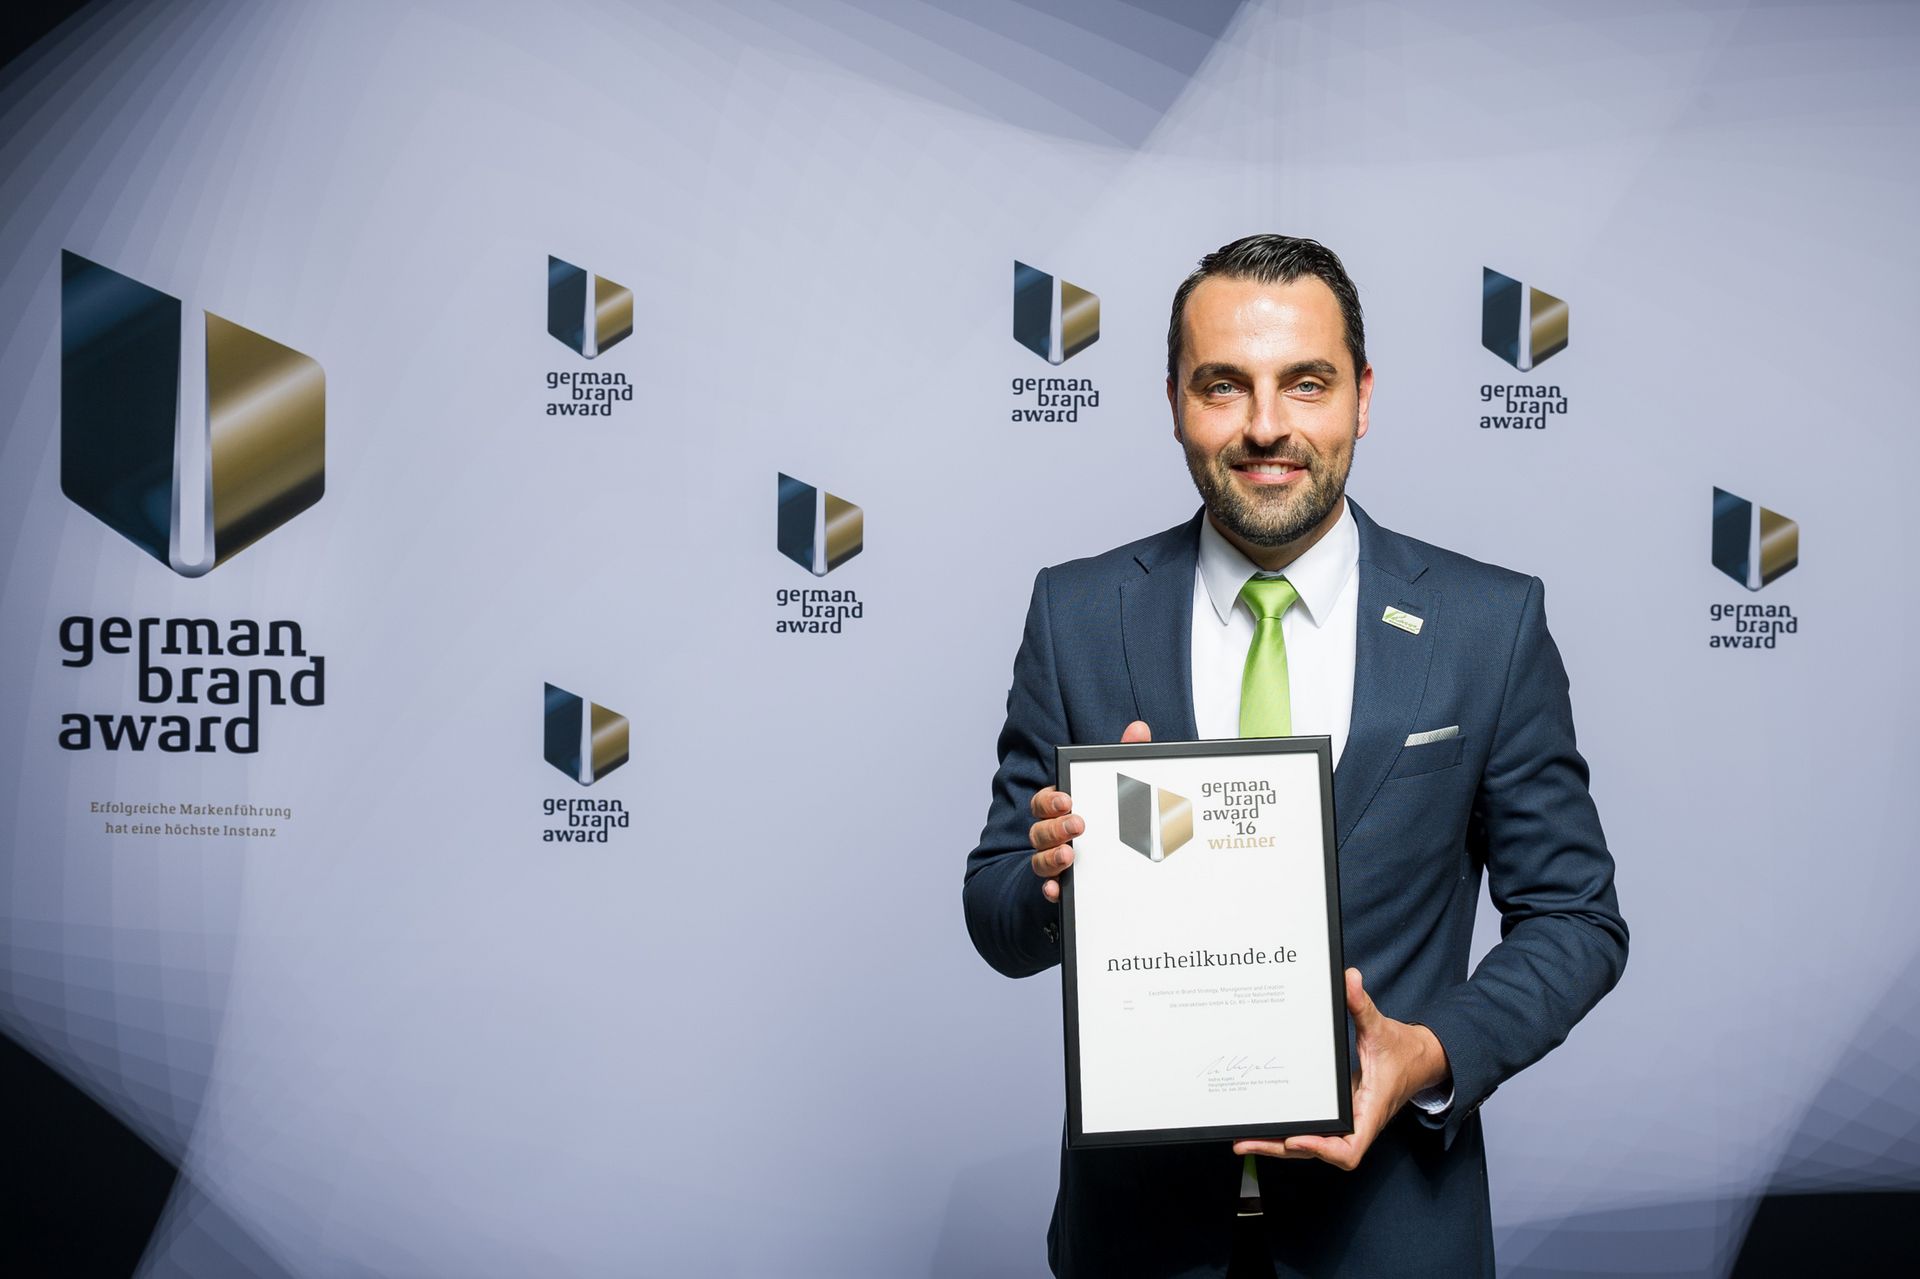 German Brand Award 2016-Marketing Chef Jochen Kühn accepts the prize